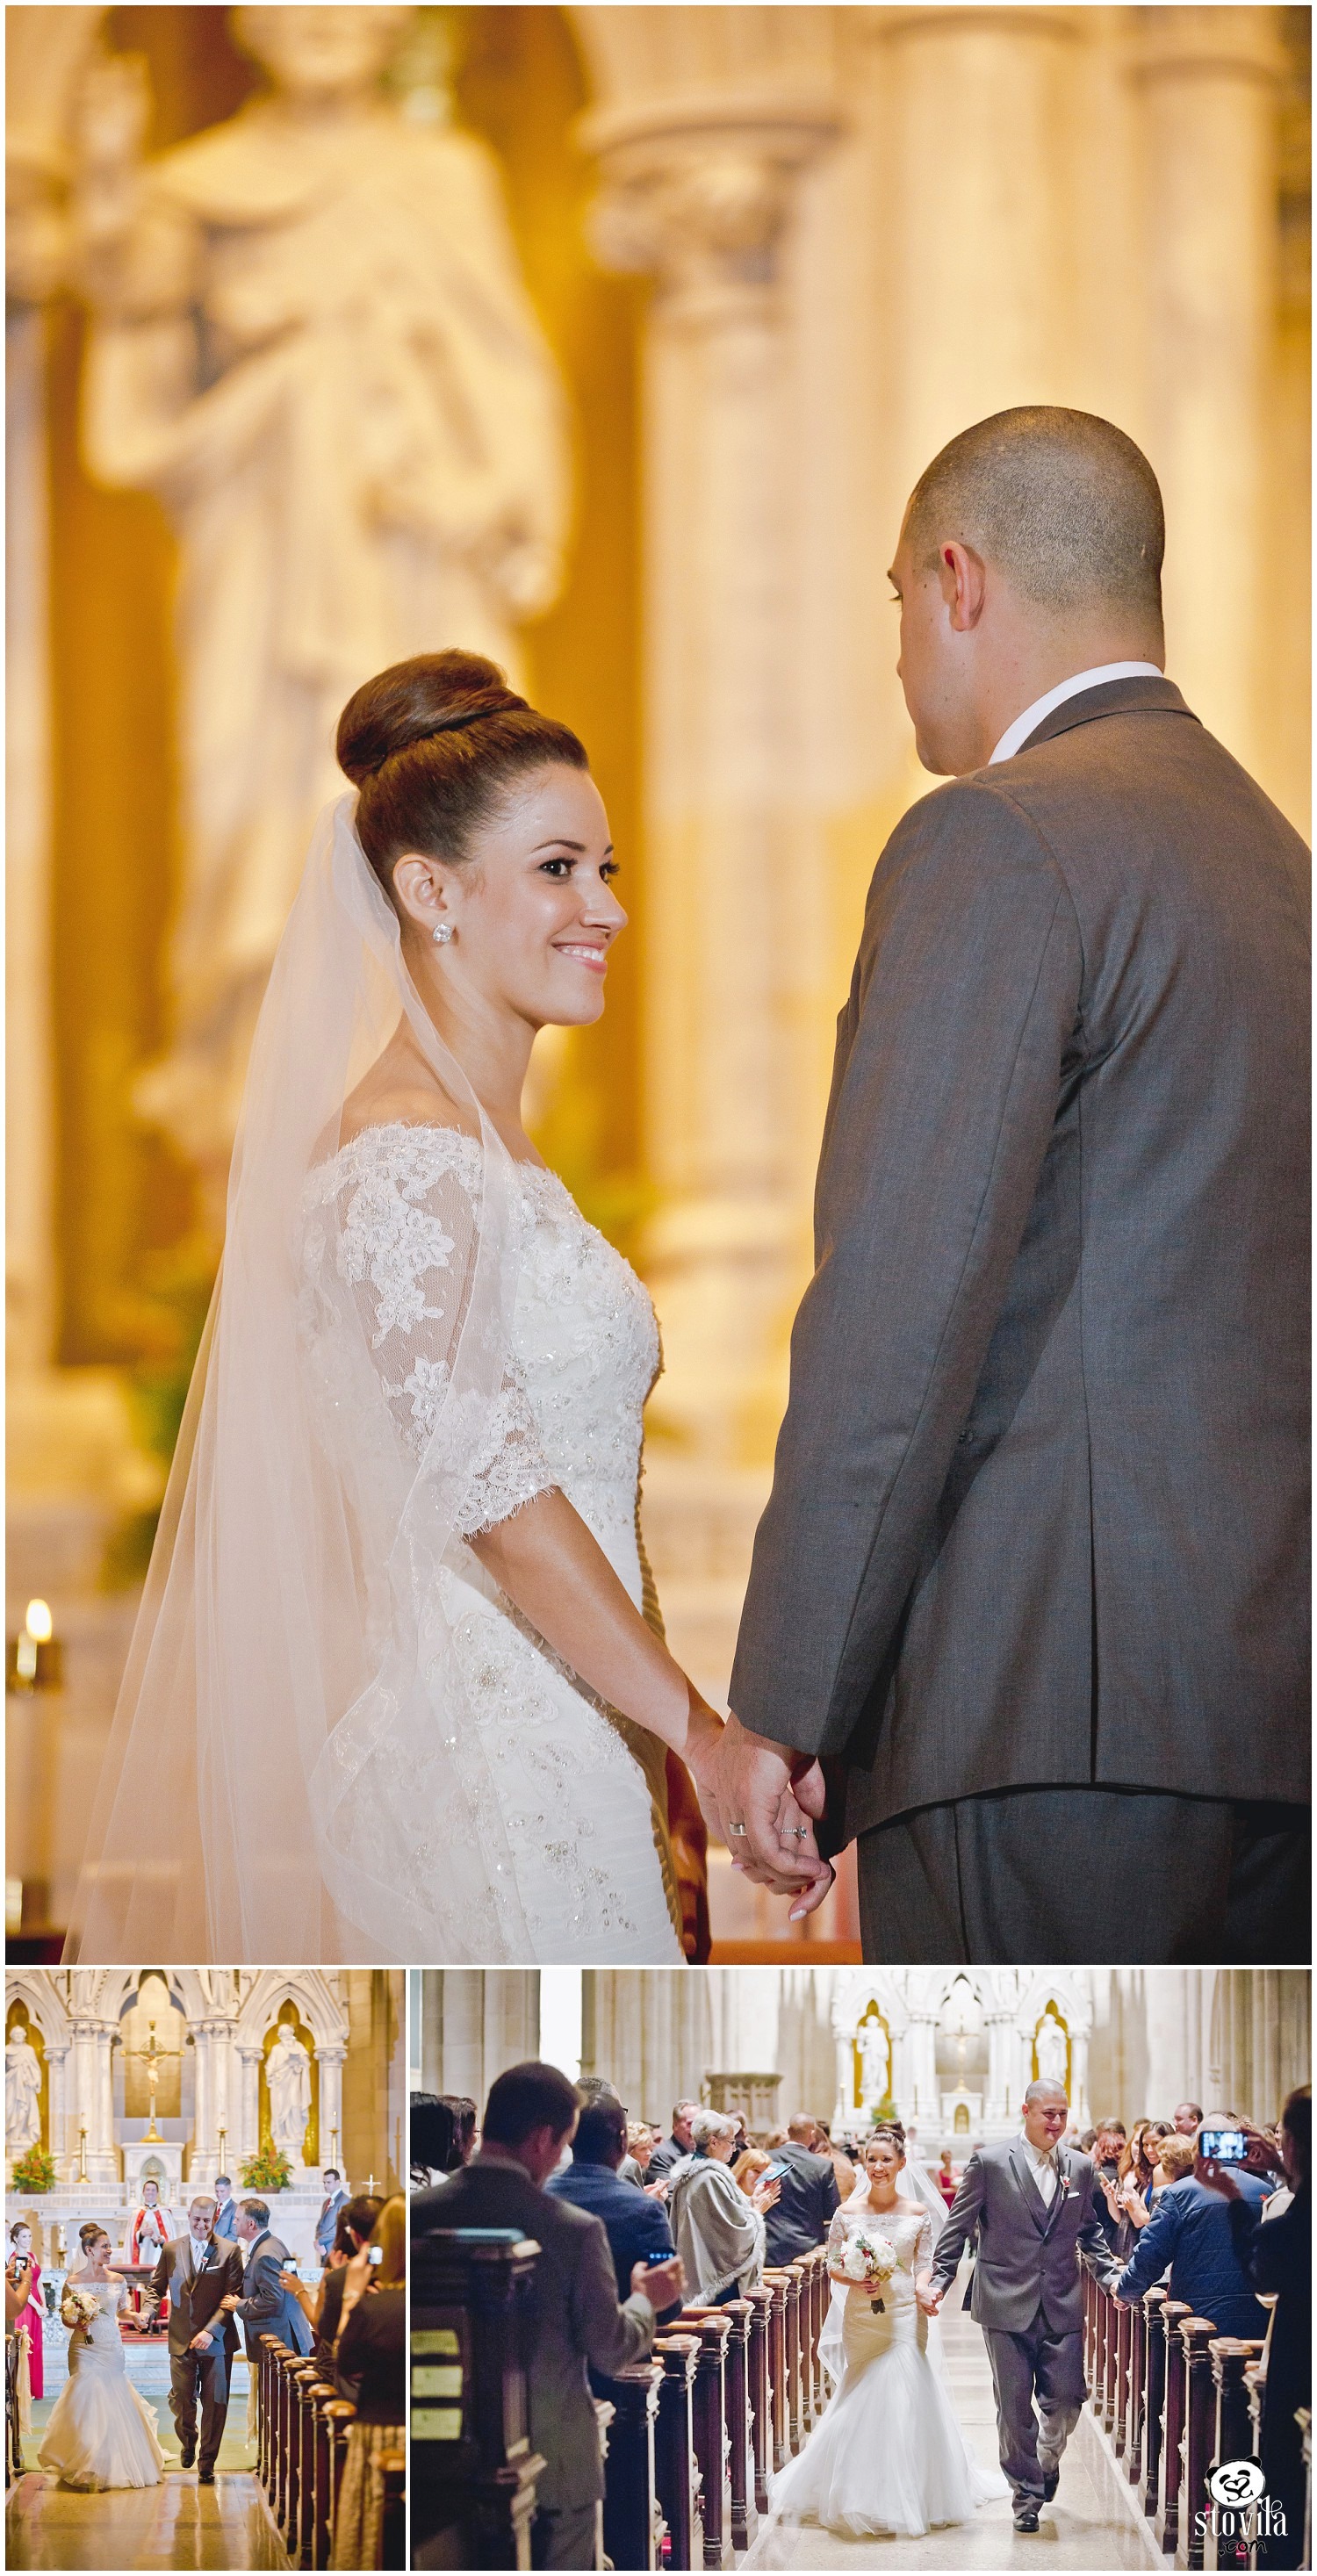 KB_Tirrell Room Wedding, Boston - Gate of Heaven Church - STOVILA Photography (19)